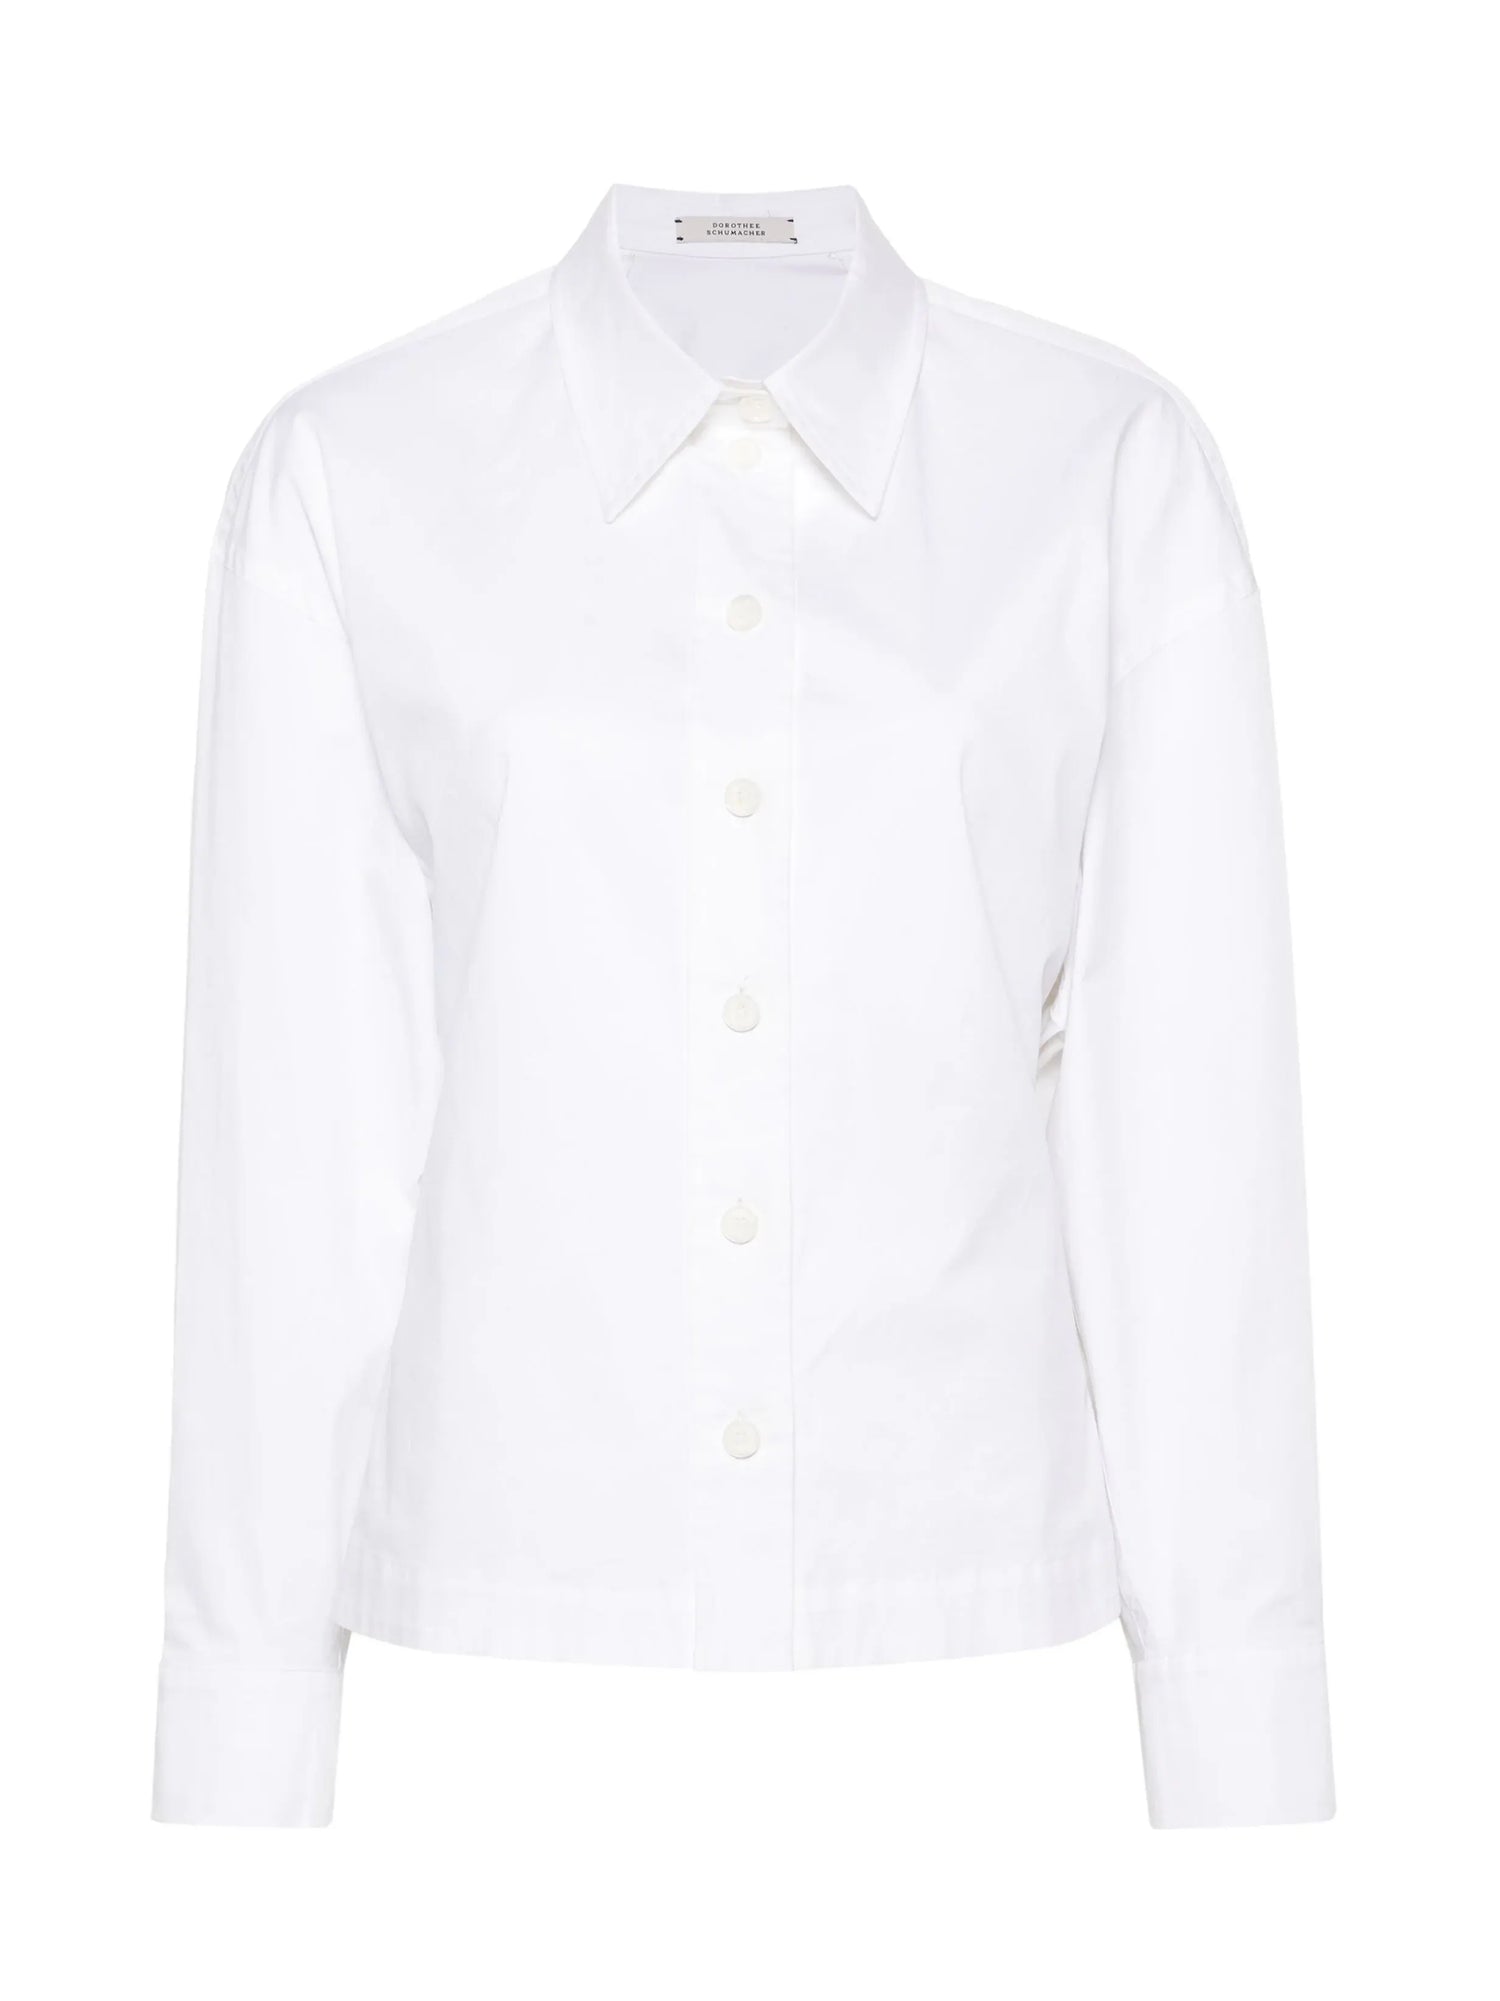 POWERFUL VOLUMES blouse, white